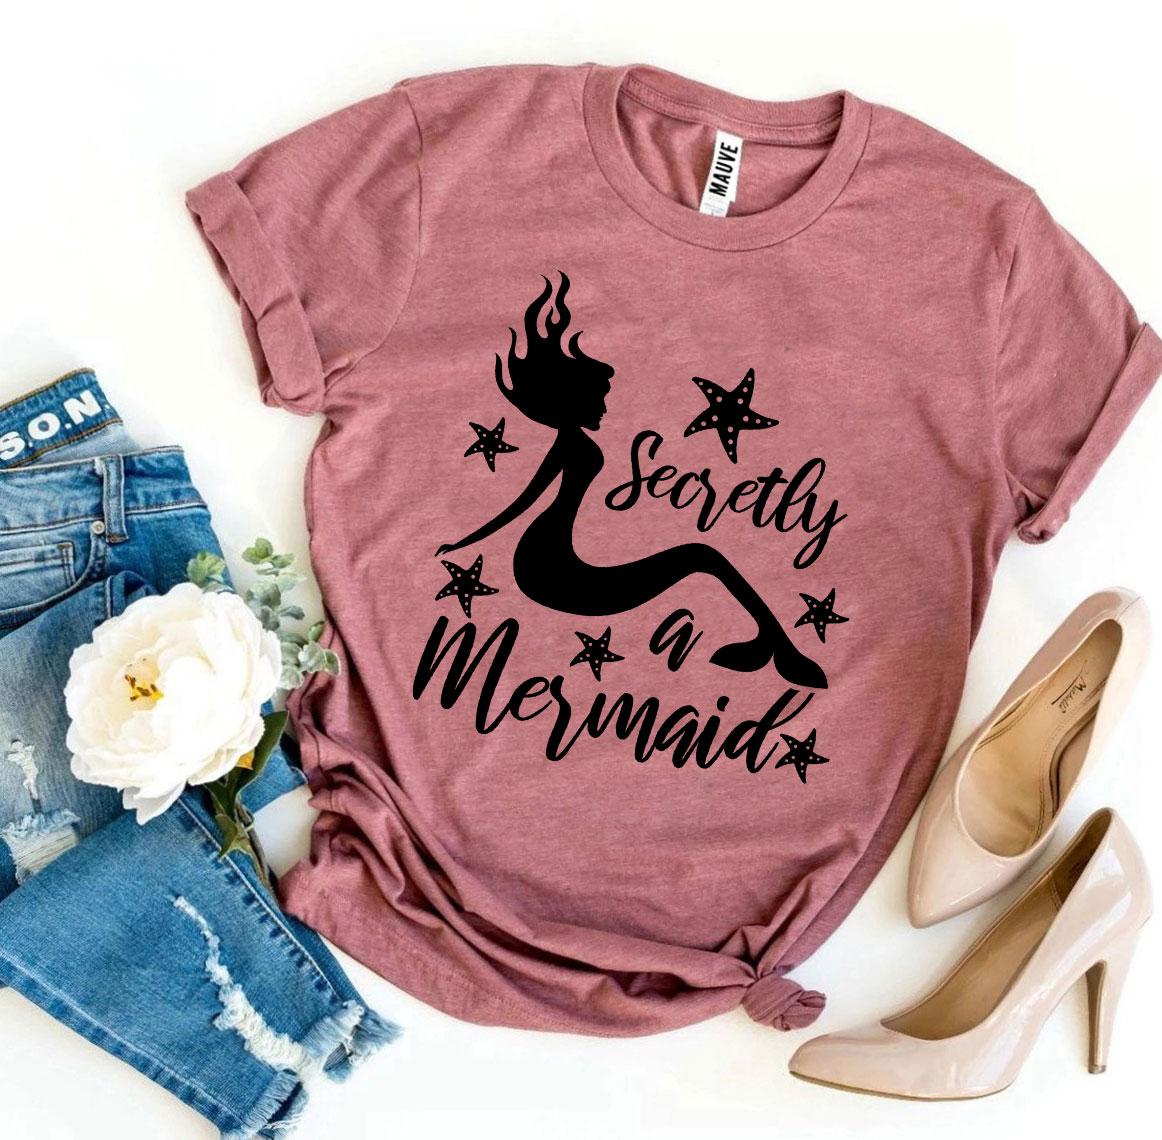 Secretly a Mermaid T-shirt Raspberry Smoke Online Store